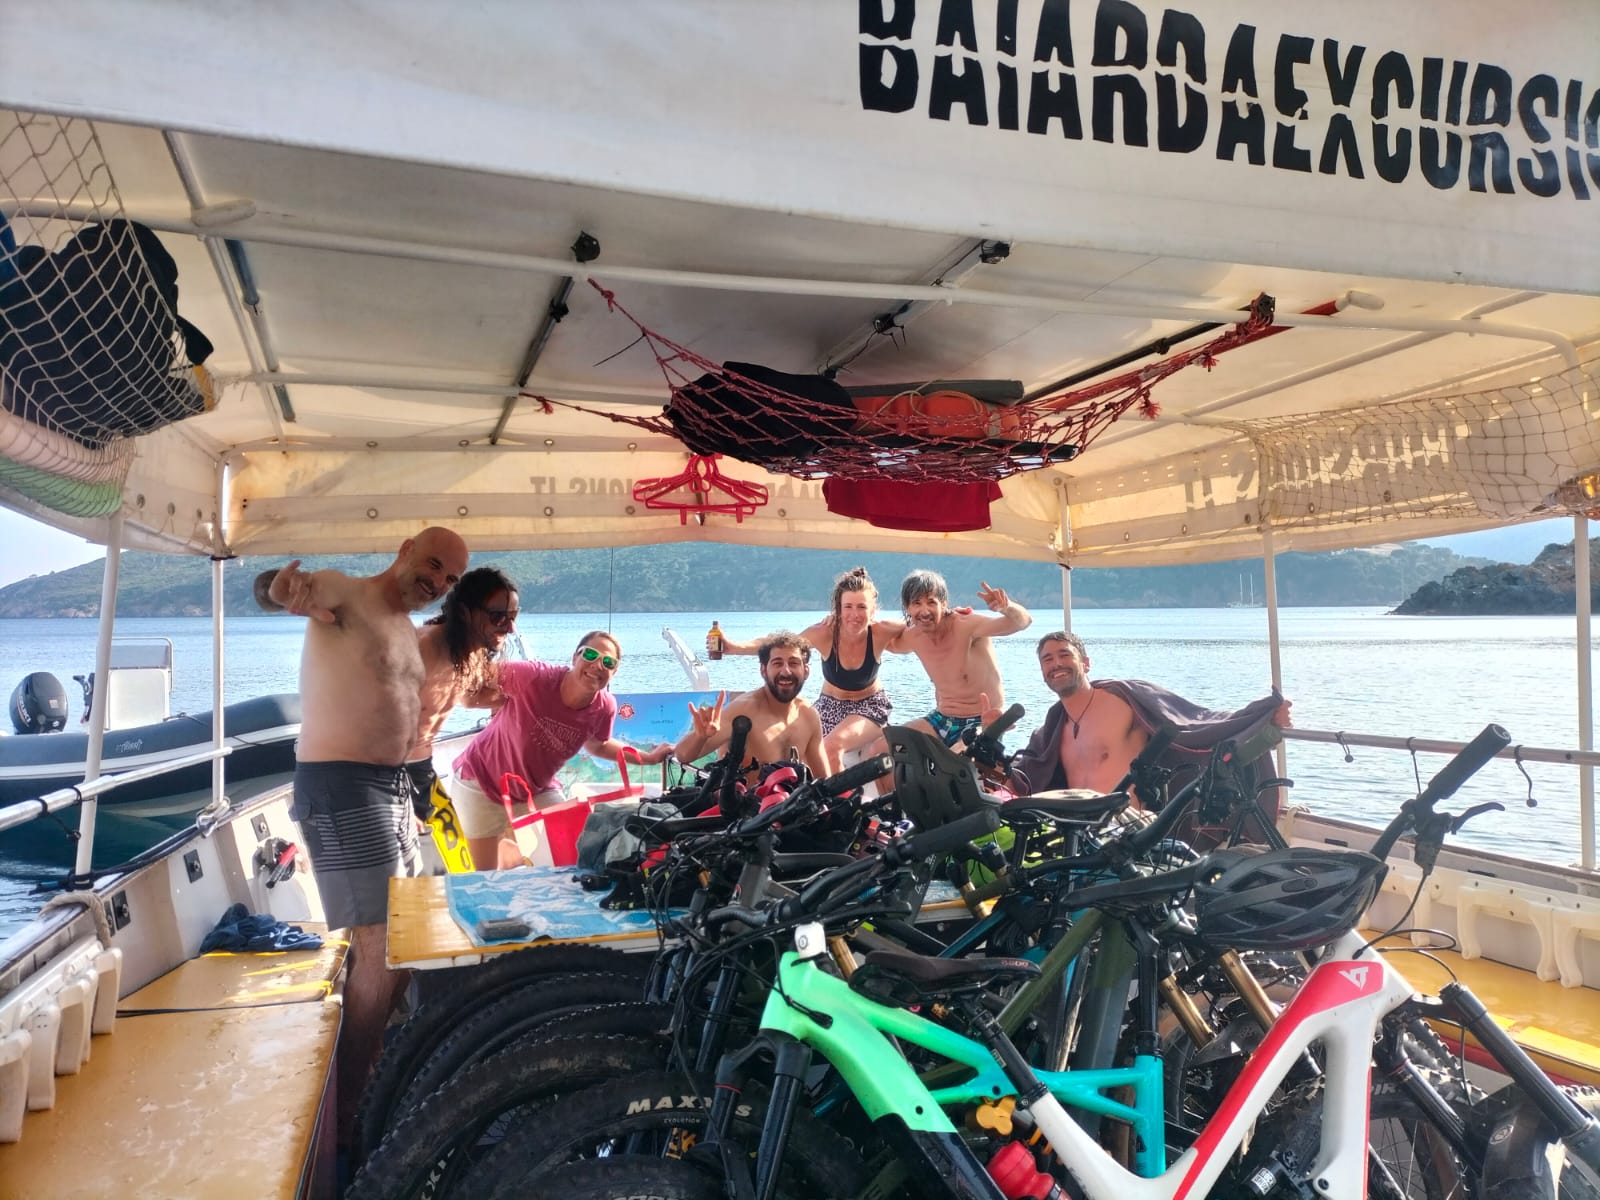 E-bike Tour Monte Calamita with return by boat